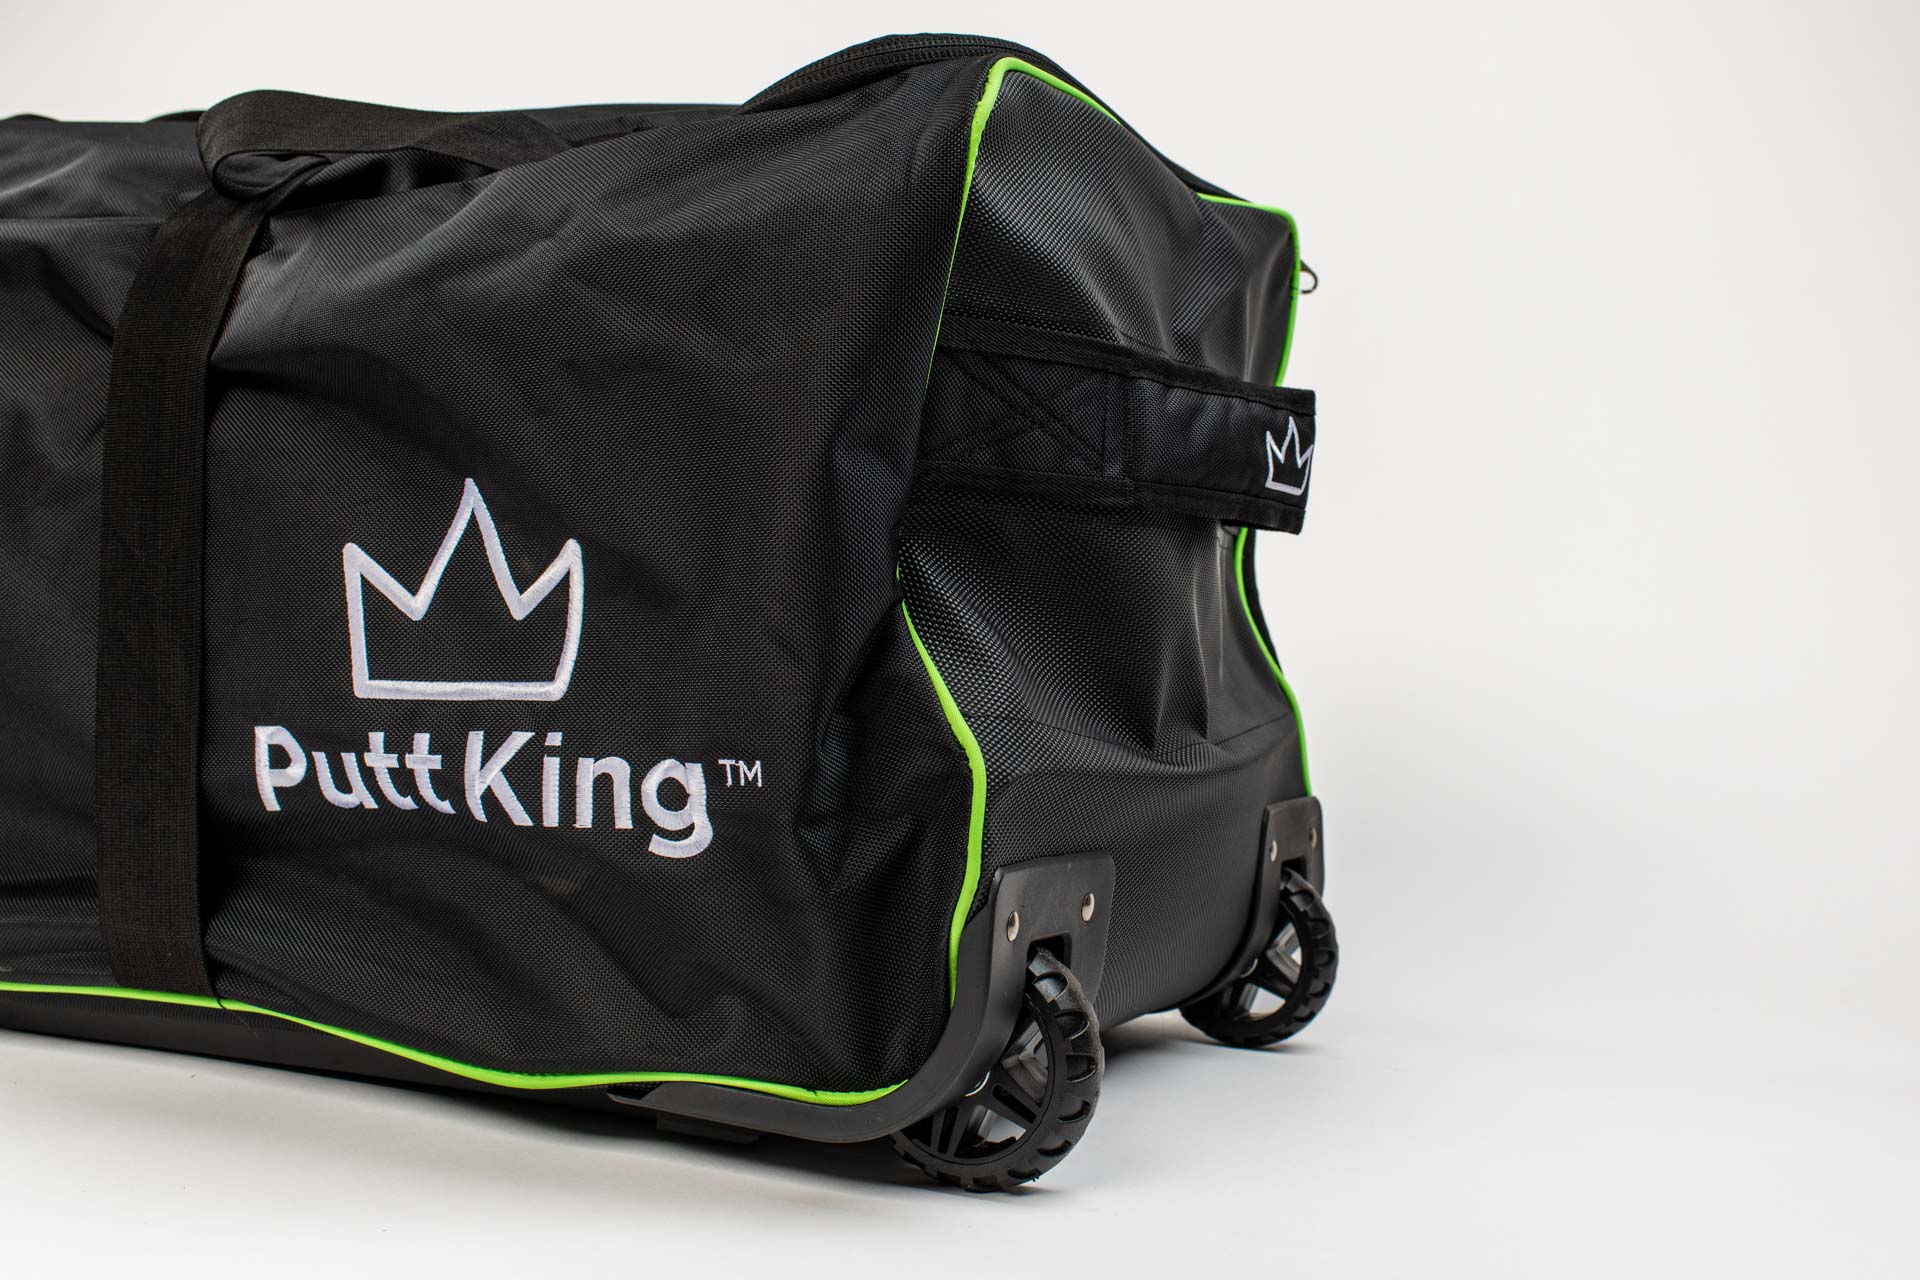 Putt King detail of wheels on bag